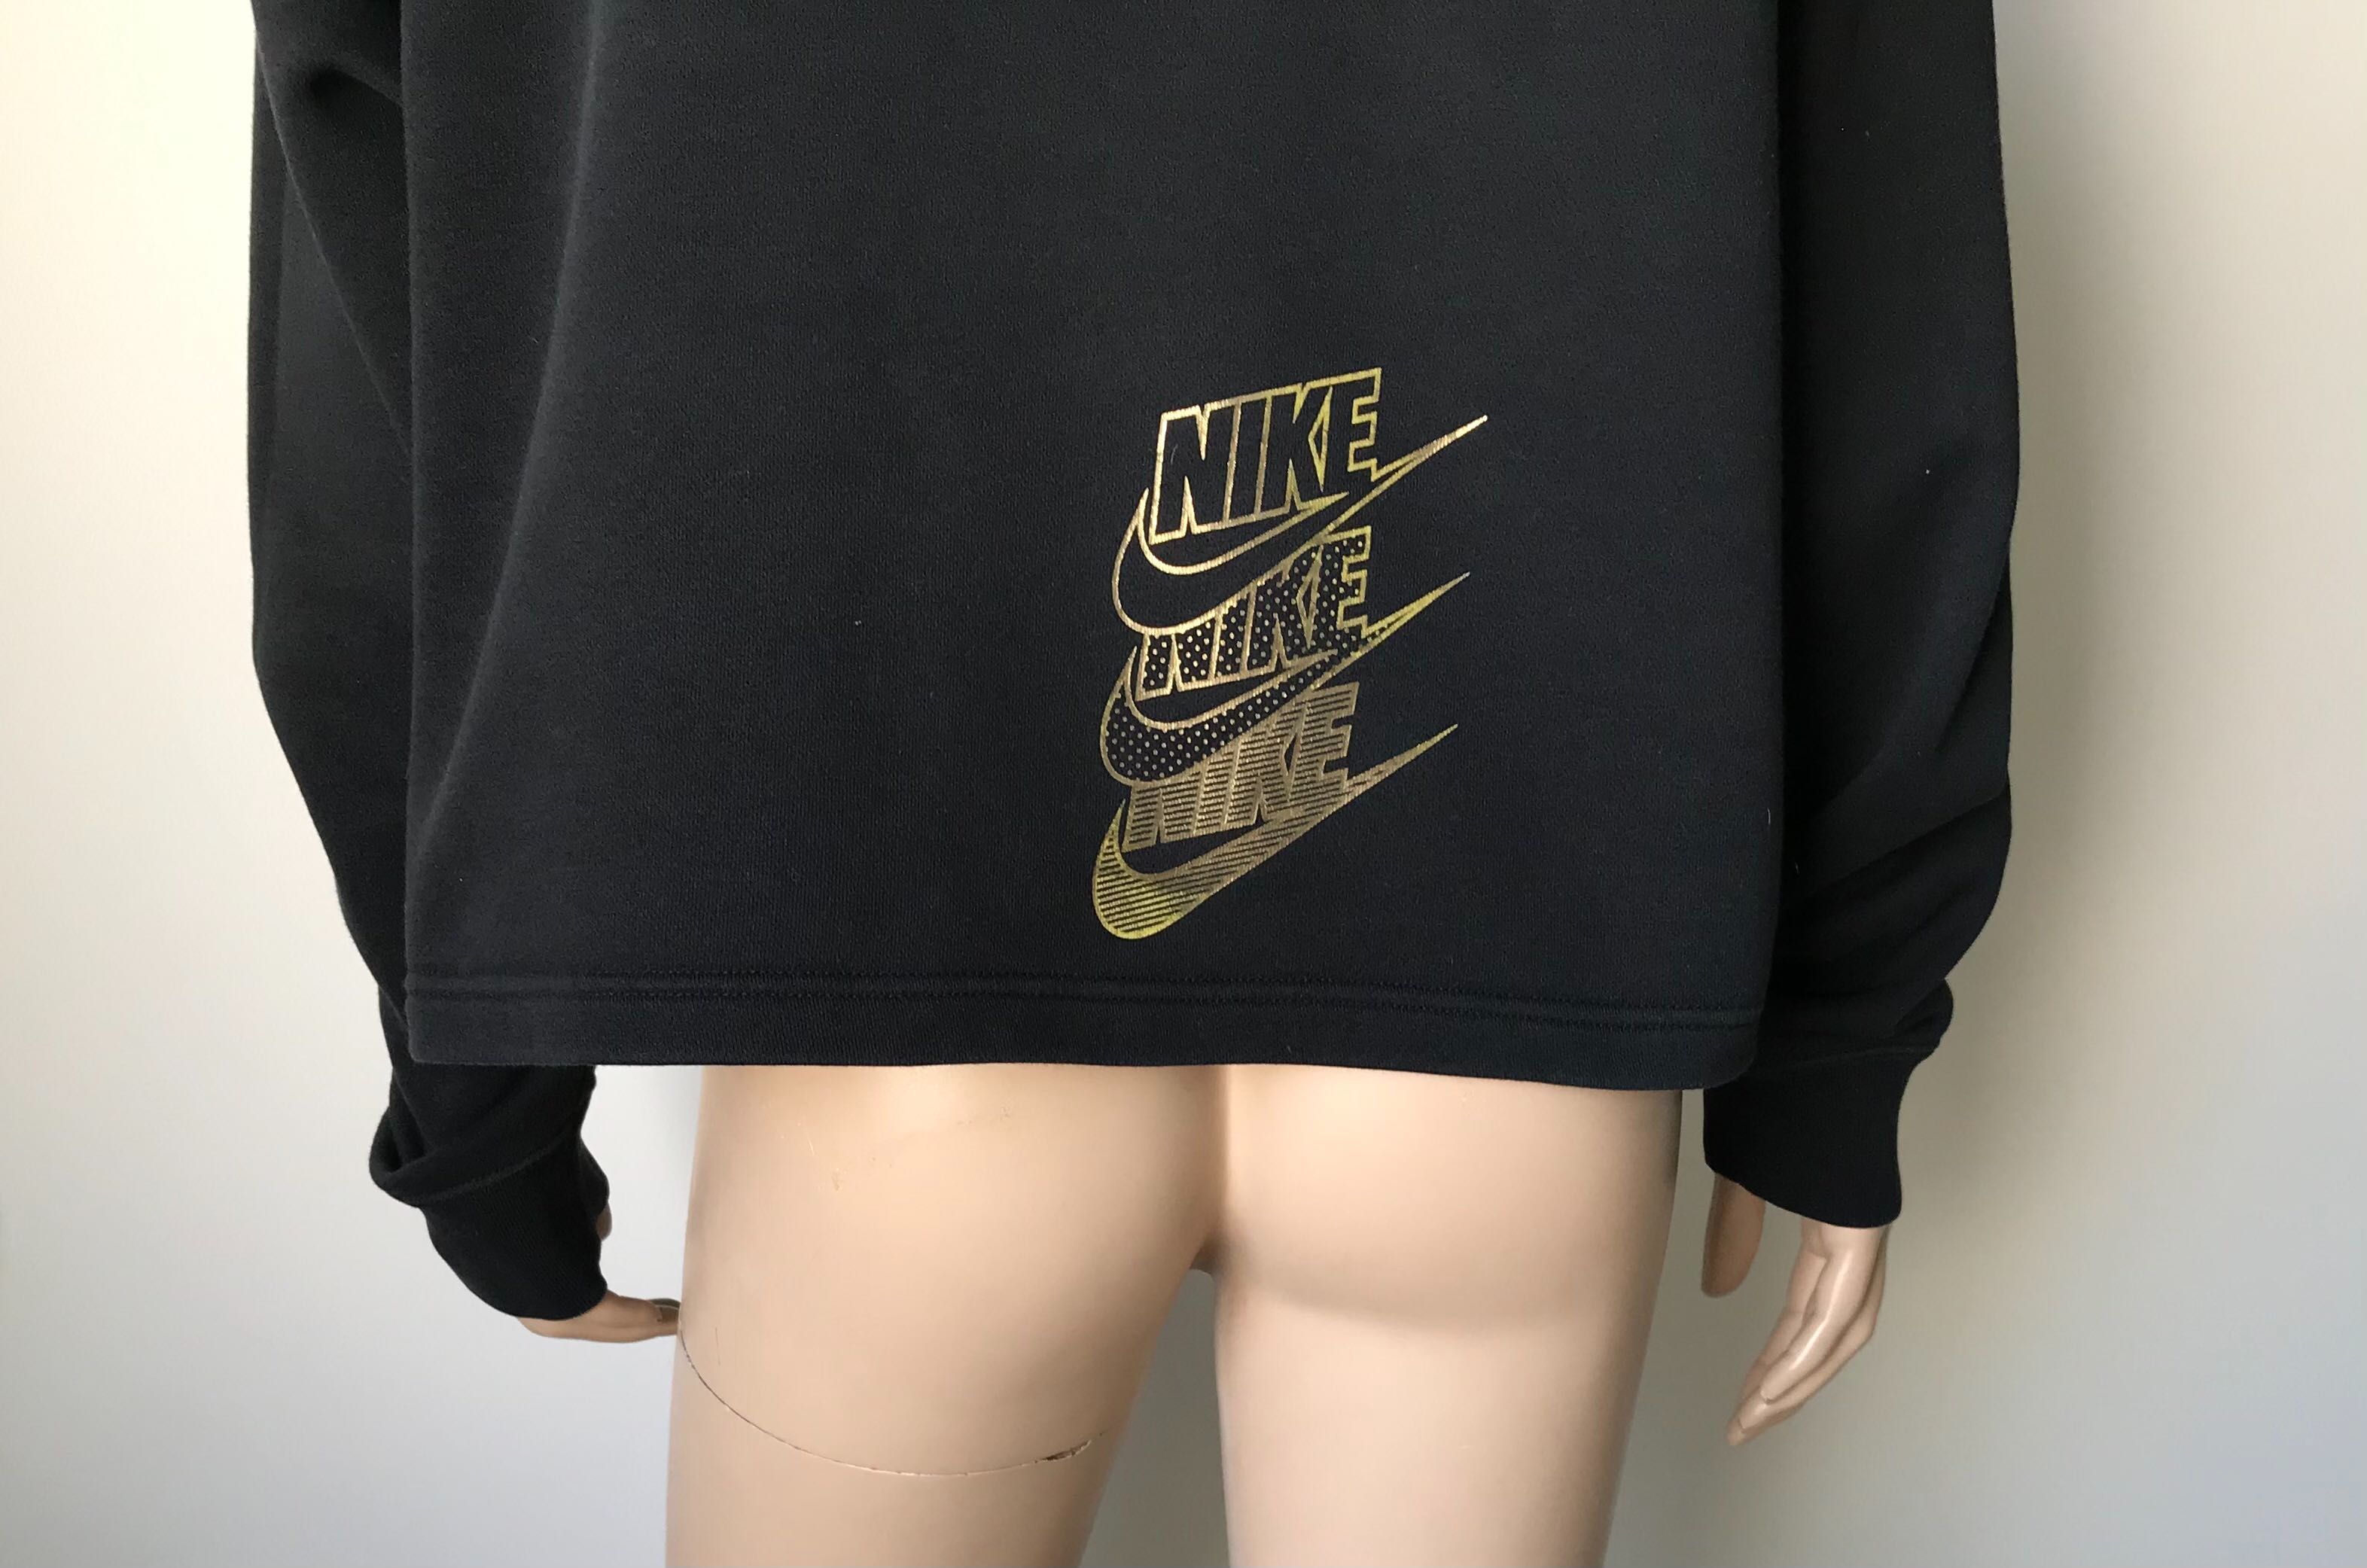 Nike Just Do It bluza damska XL złote napisy.